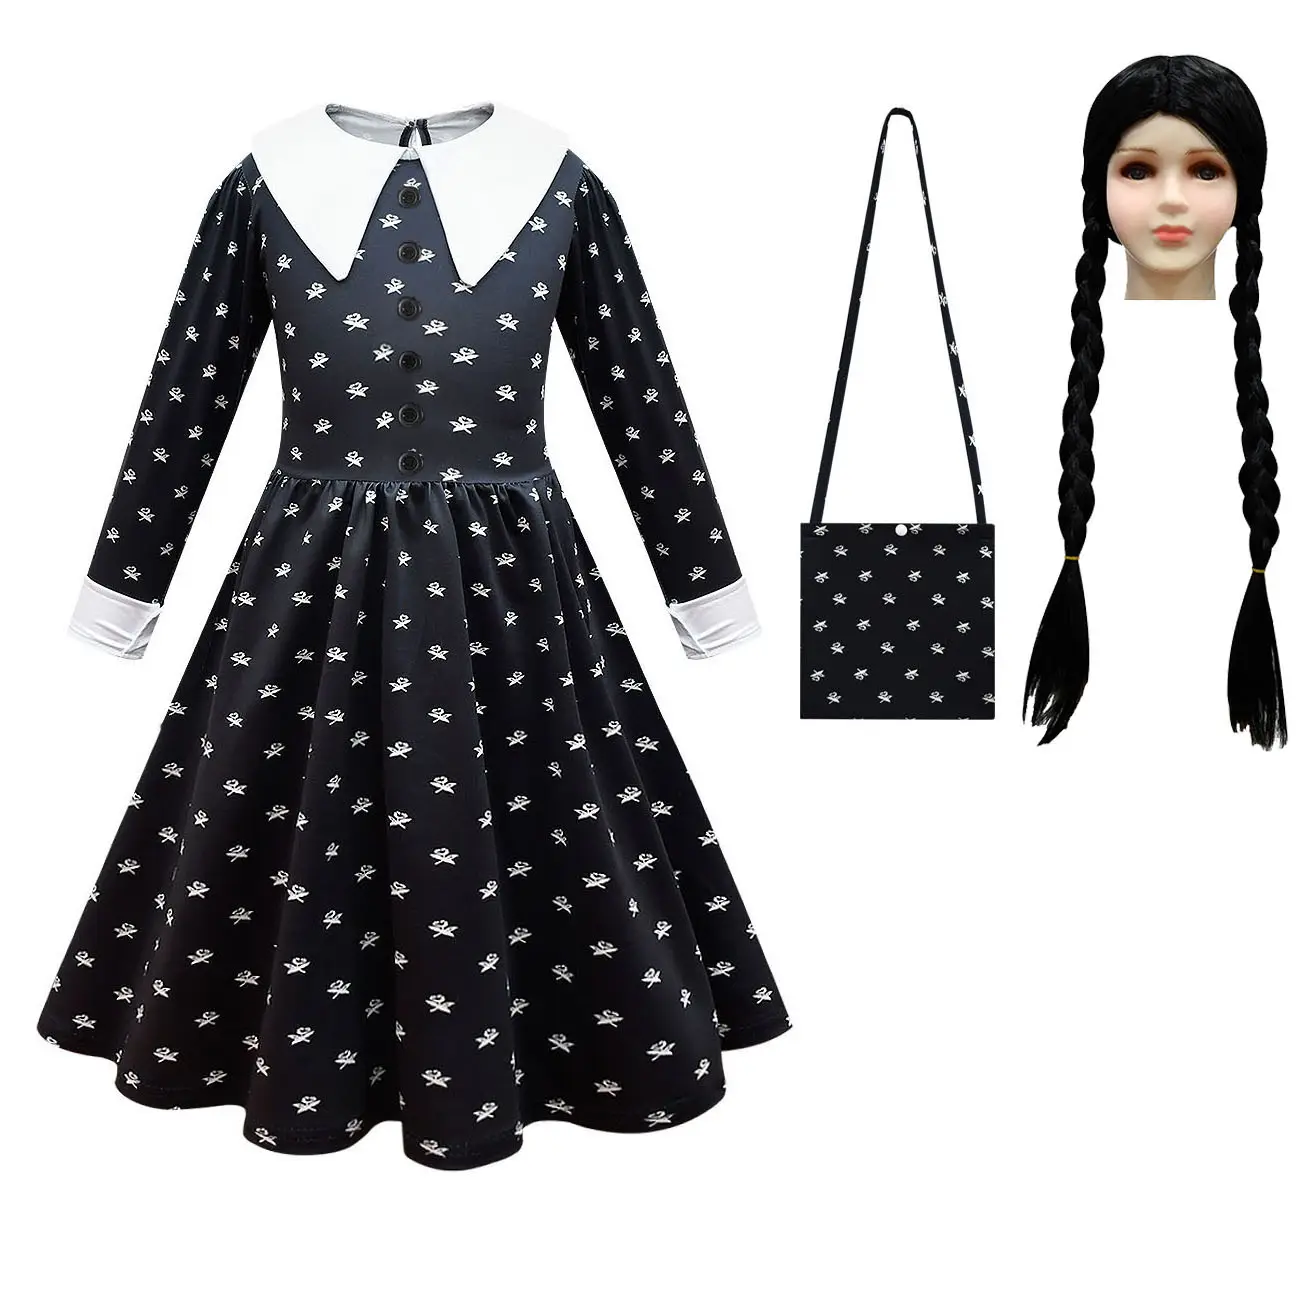 Halloween Kids Girl TV movie costume Children Wednesday Addams cosplay polka dot black dress with wig and bag set